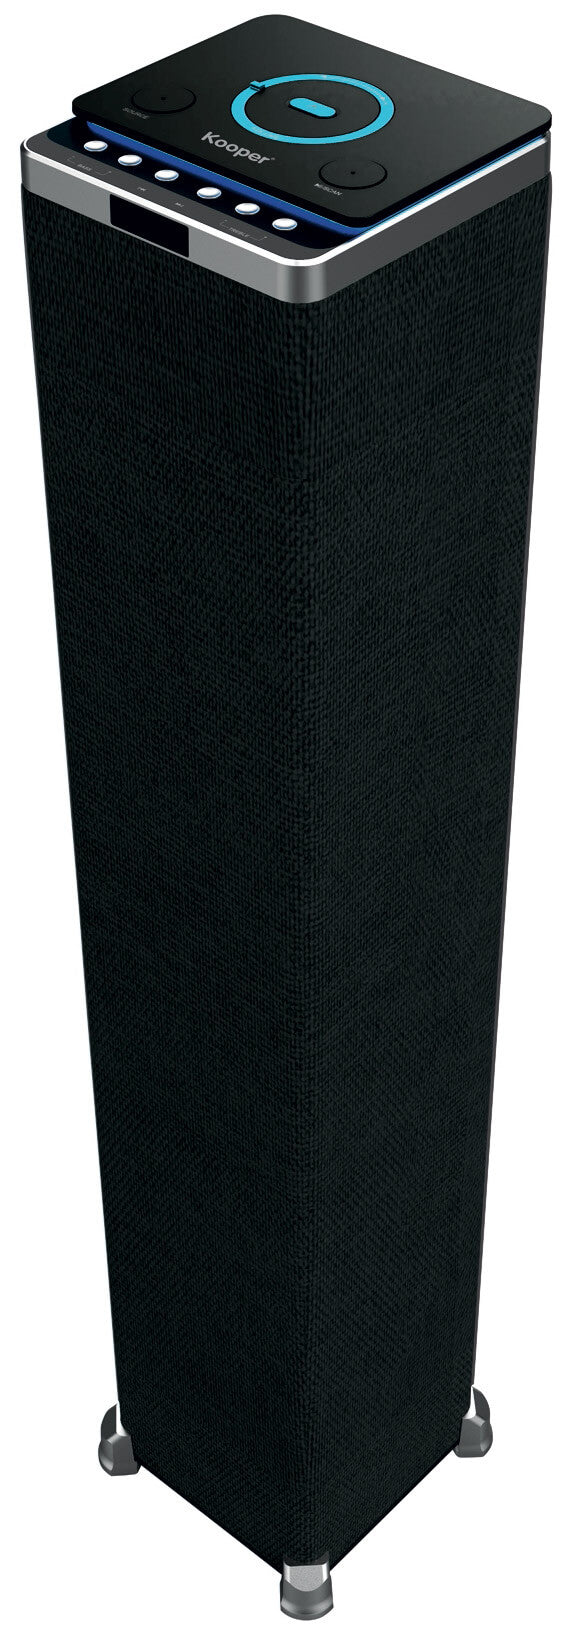 prezzo Enceinte colonne sans fil 120 W avec radio en tissu noir Kooper Techno